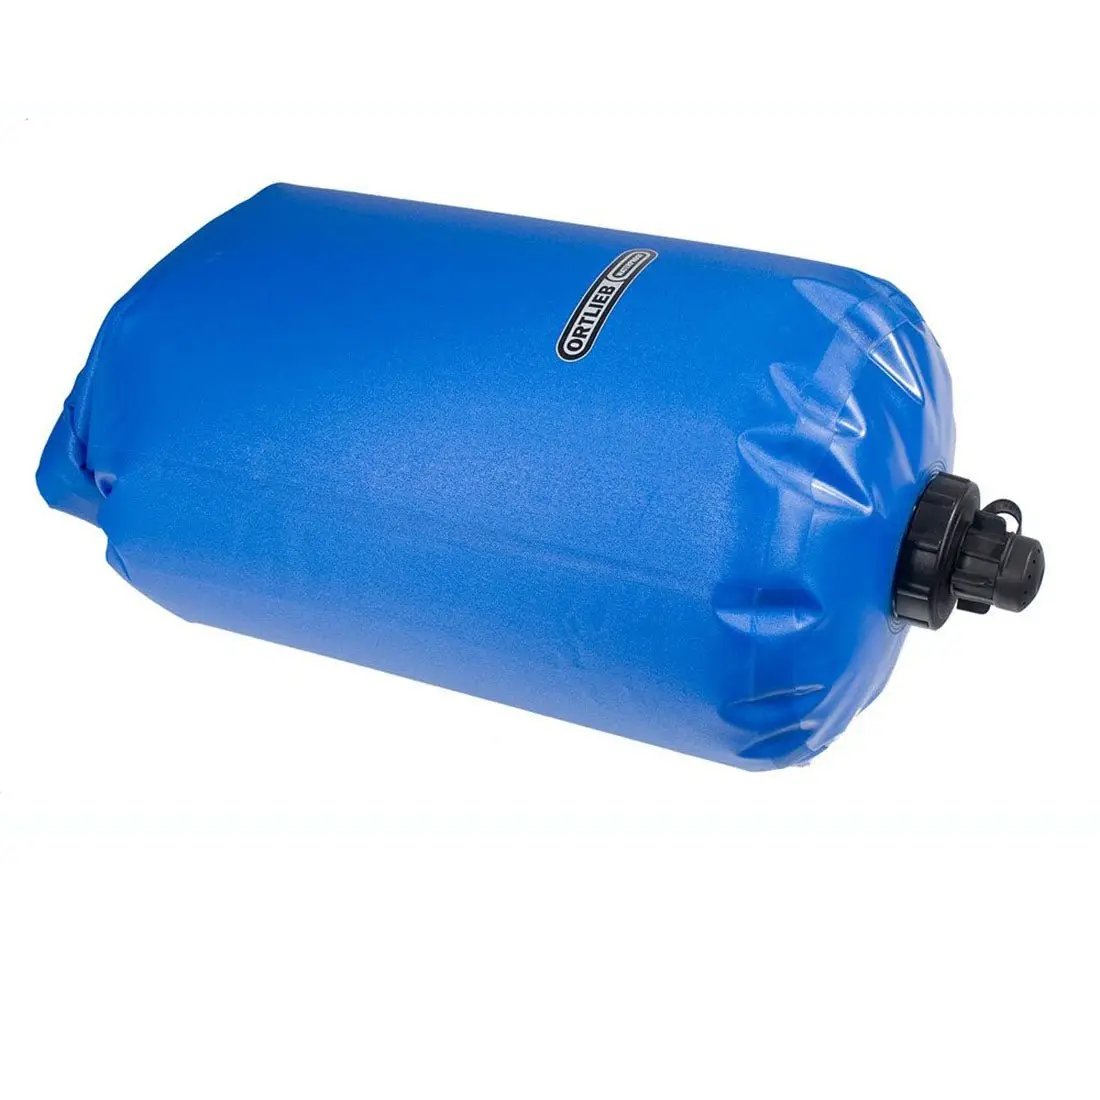 Ortlieb 2L Water Sack Bag Bladder - John Bull Clothing